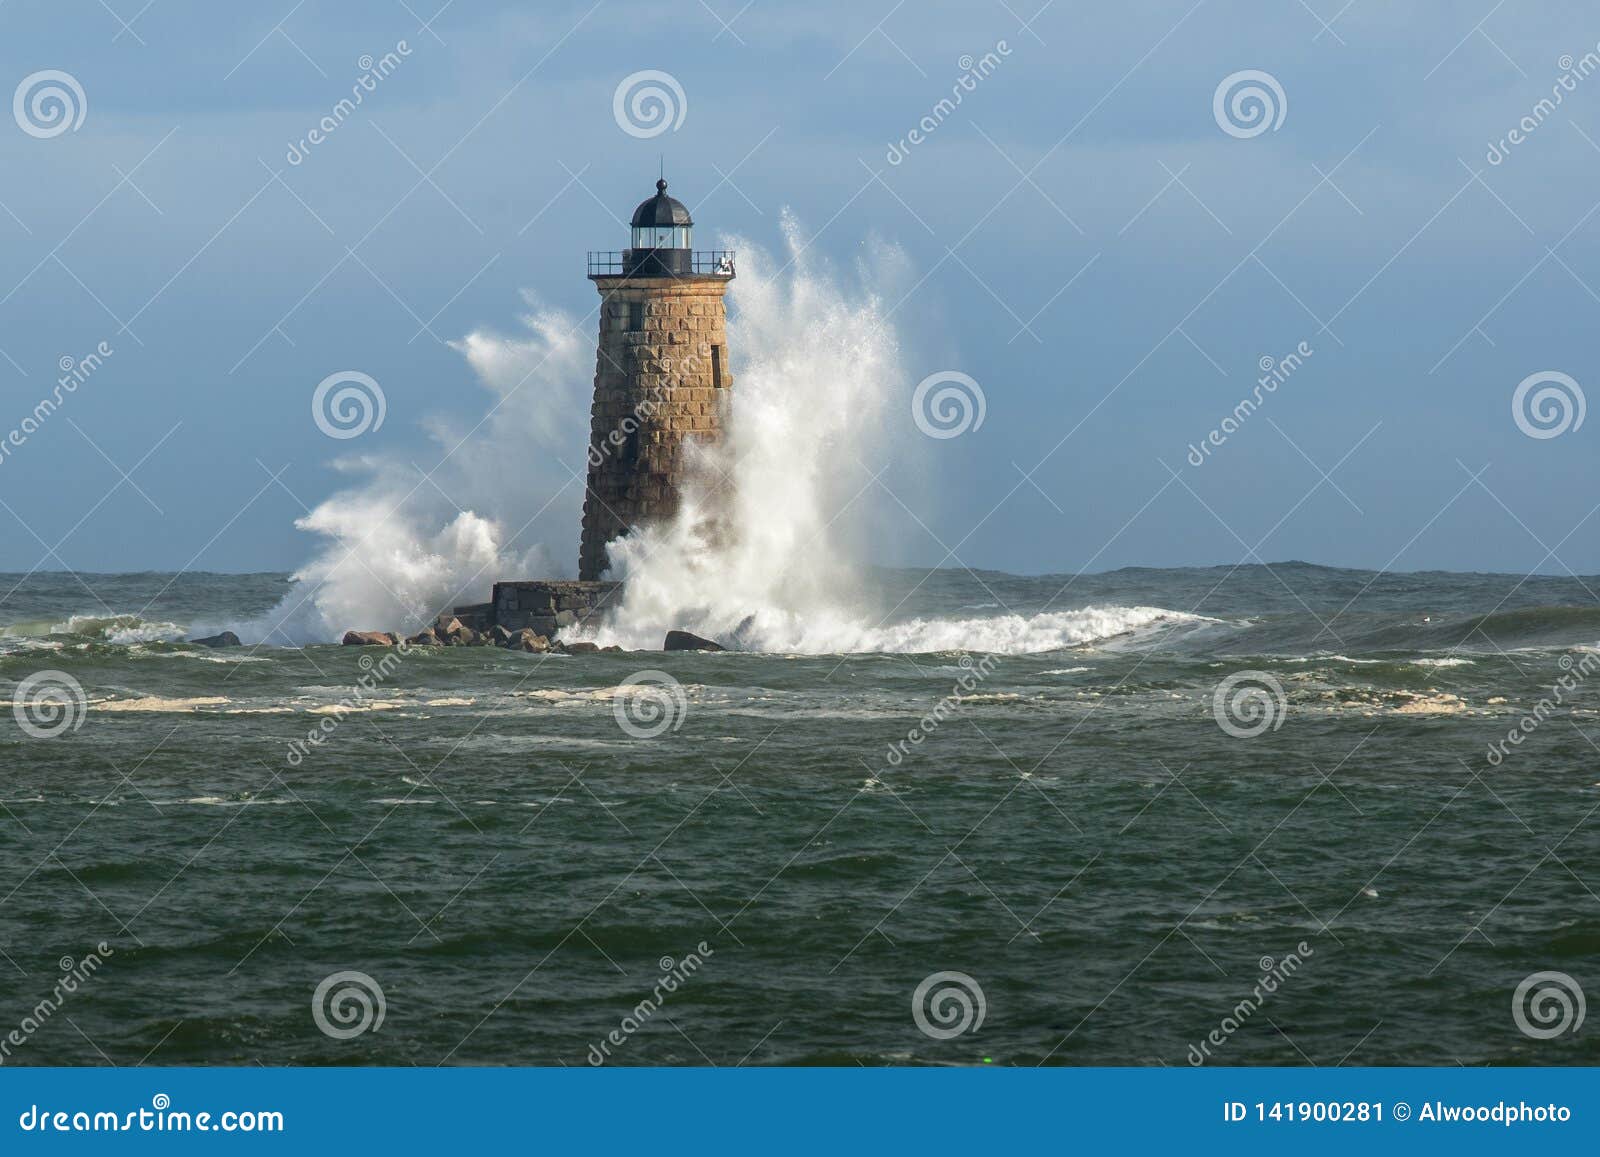 huge waves surround new england lighthouse